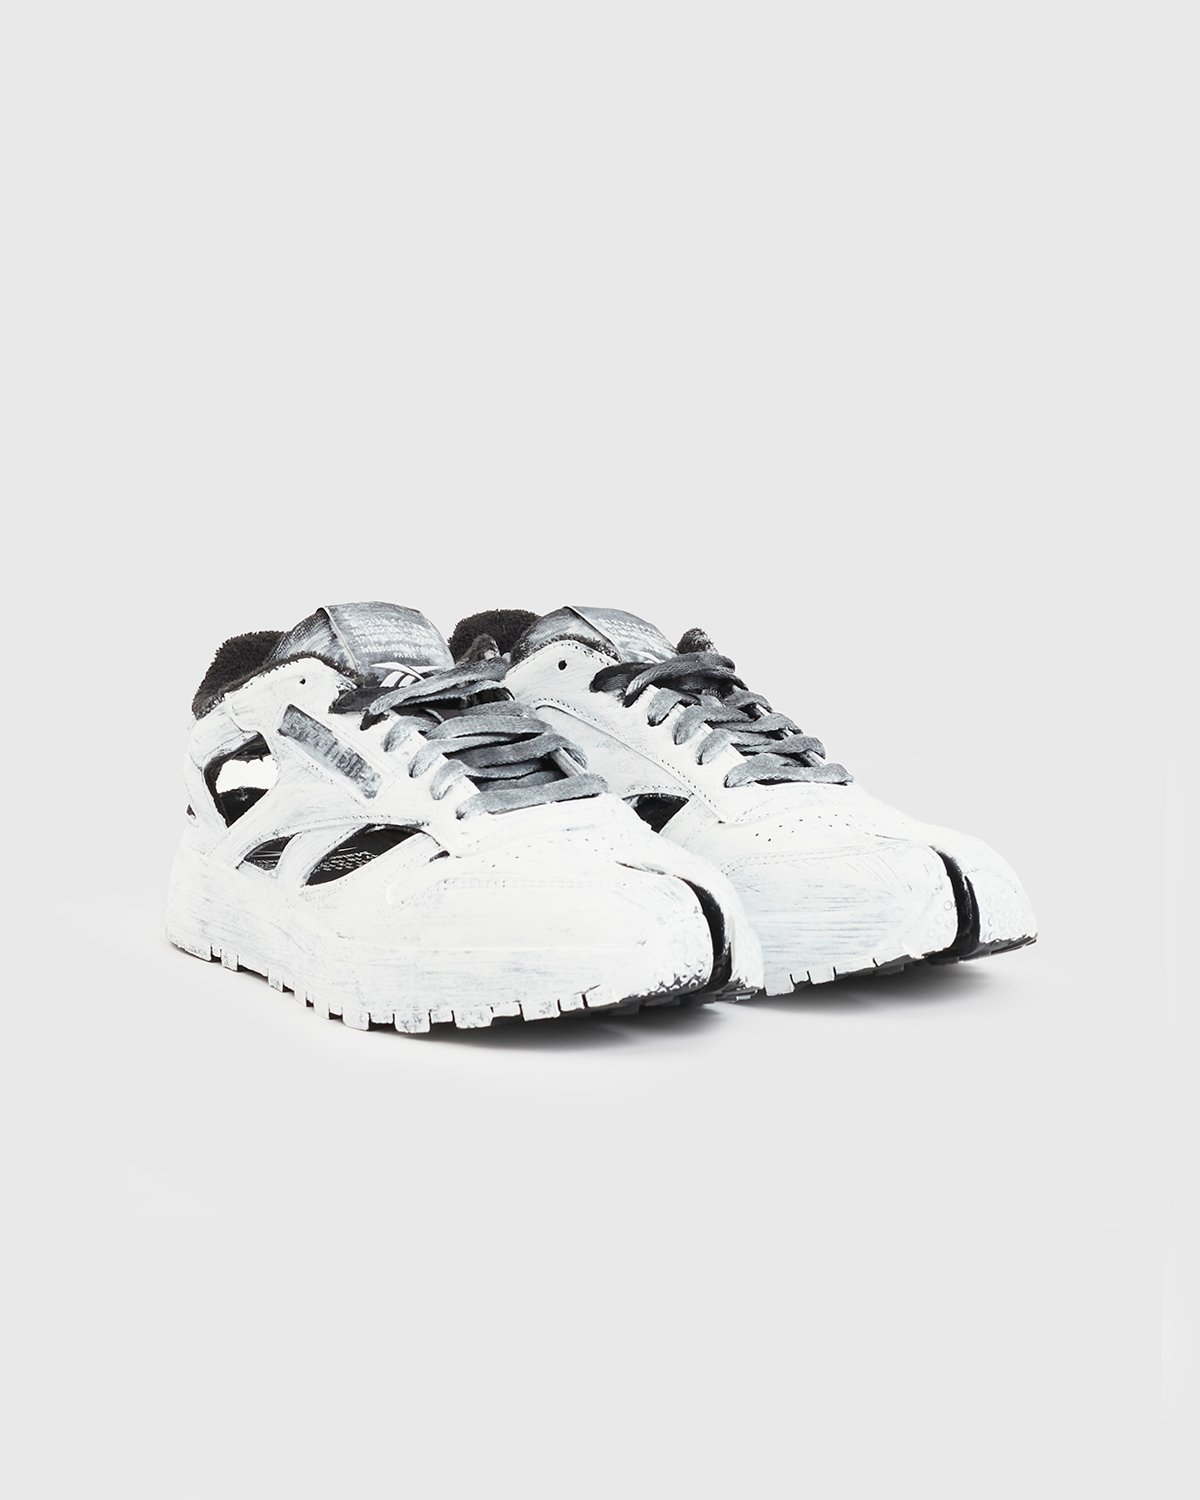 Maison Margiela x Reebok - Classic Leather Tabi Low Bianchetto - Footwear - White - Image 2